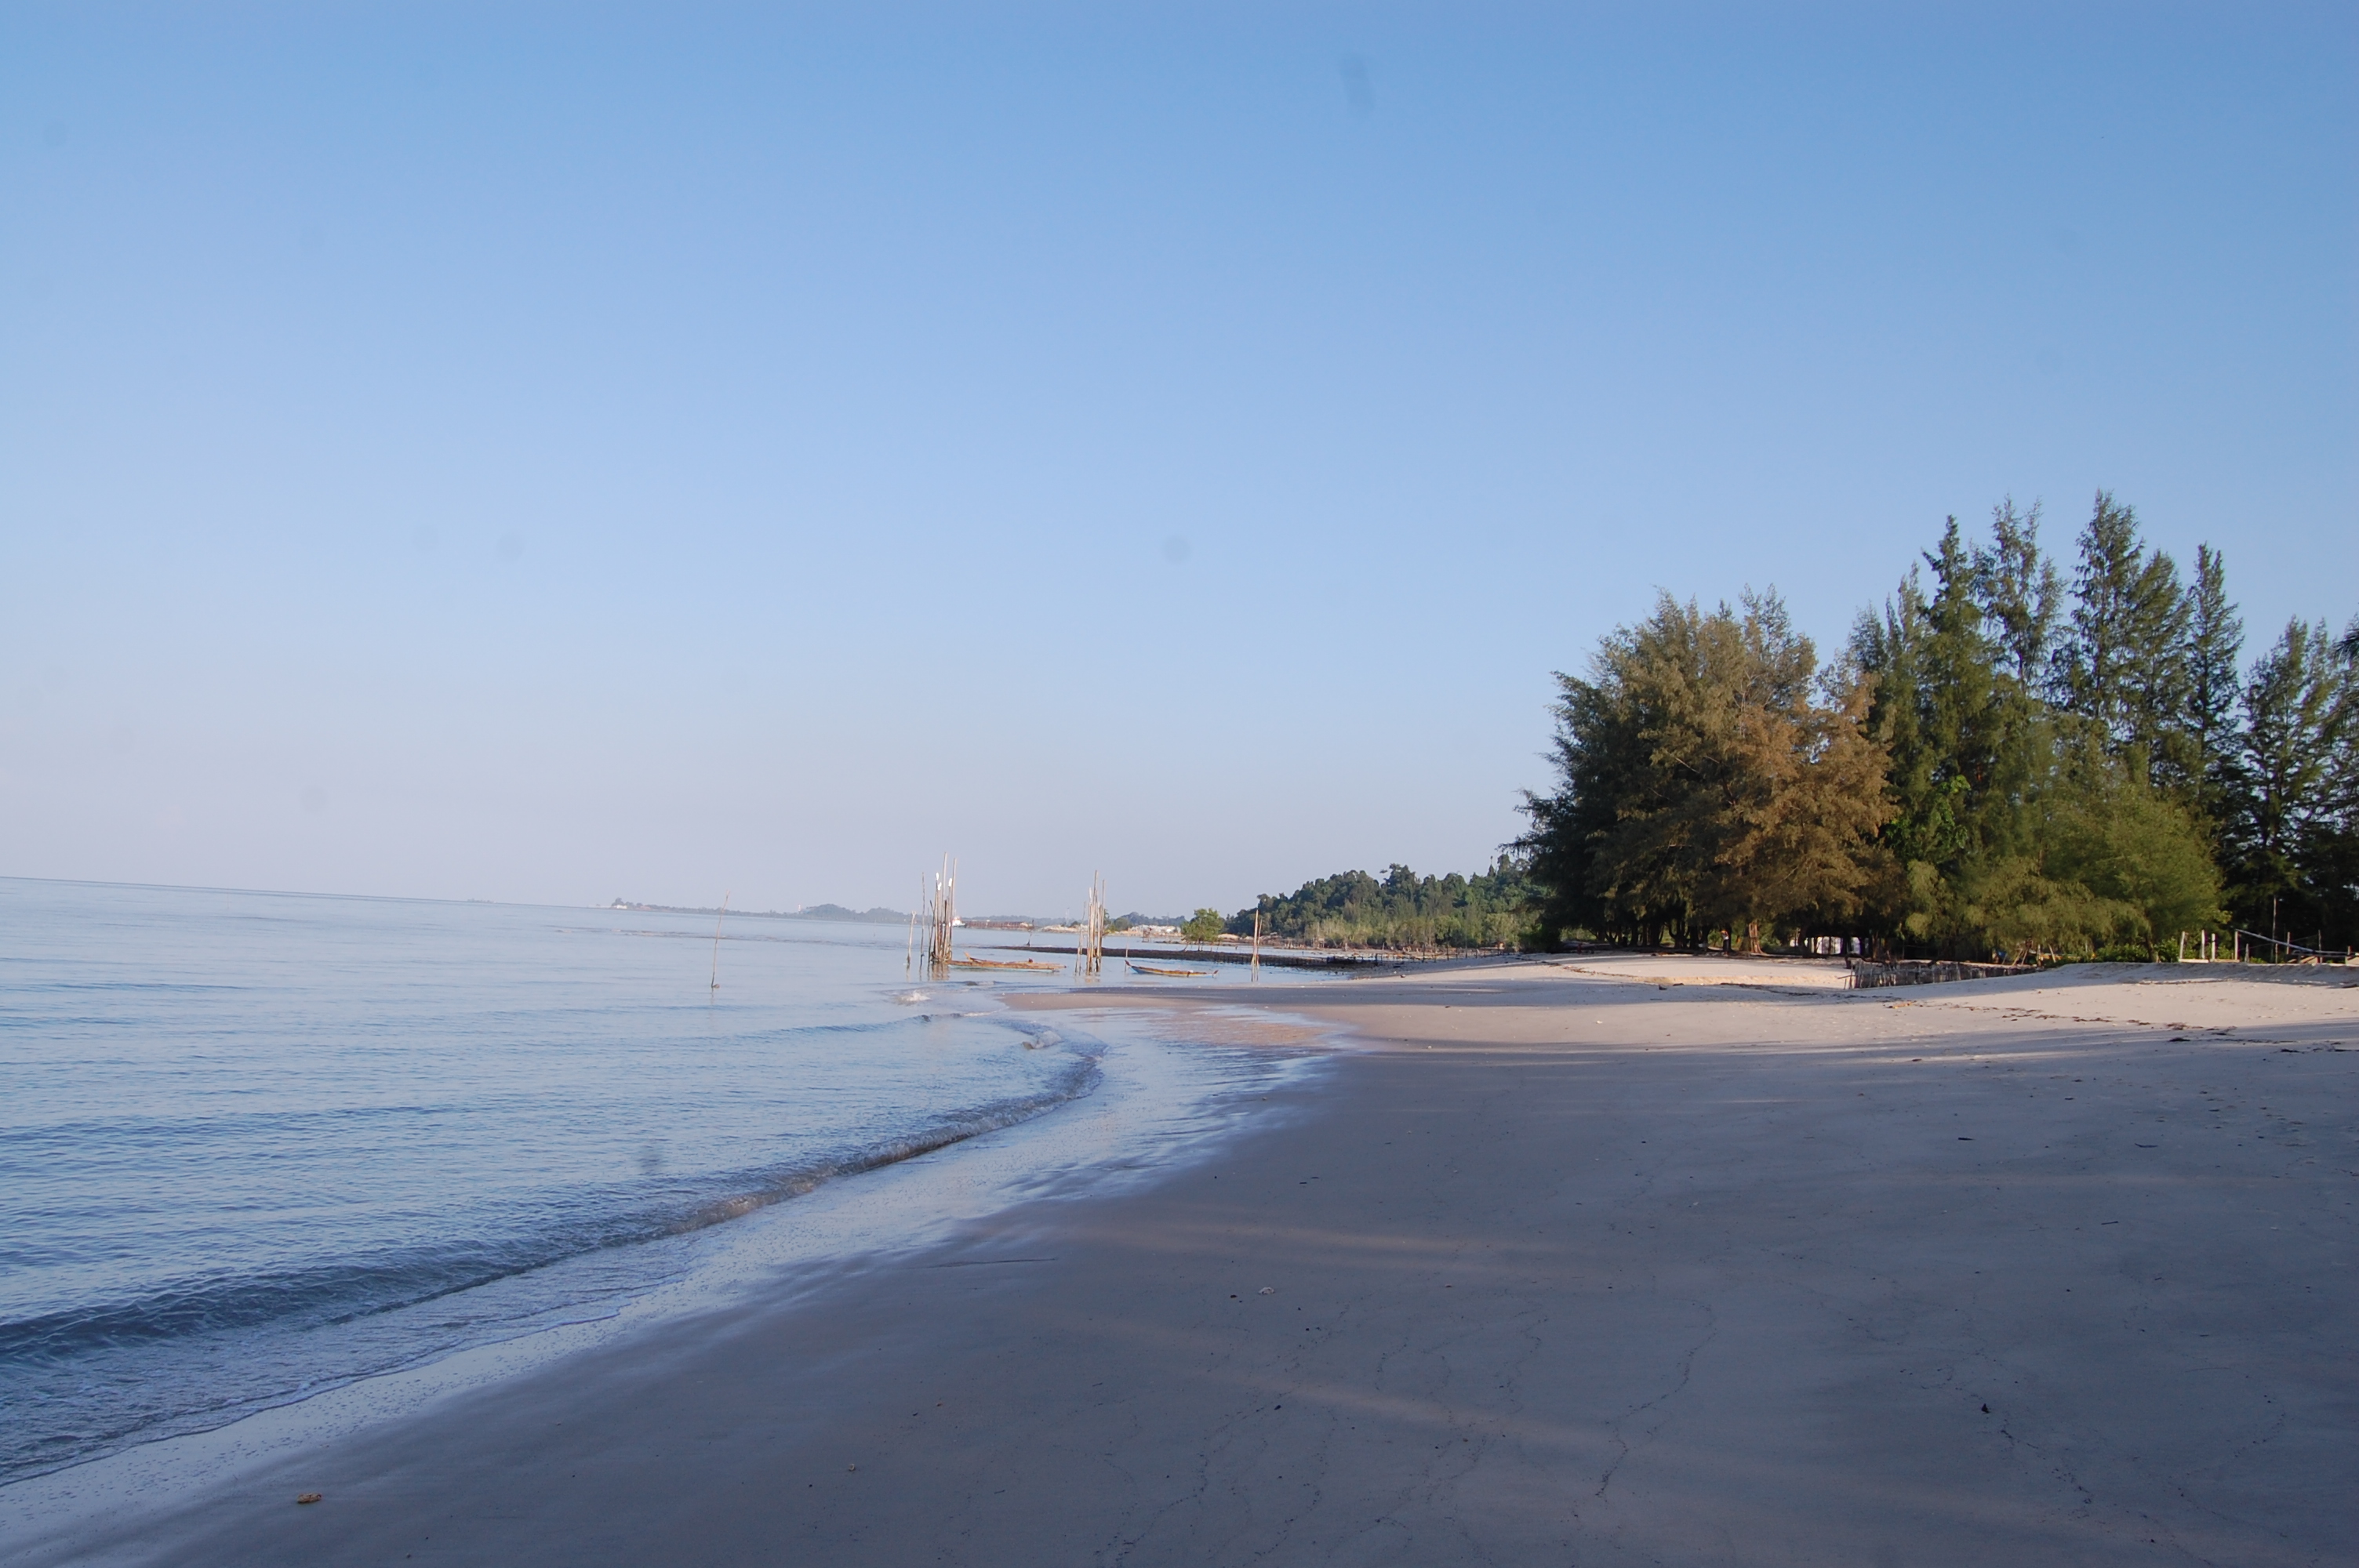 Download this Karimun Pongkar Beach picture